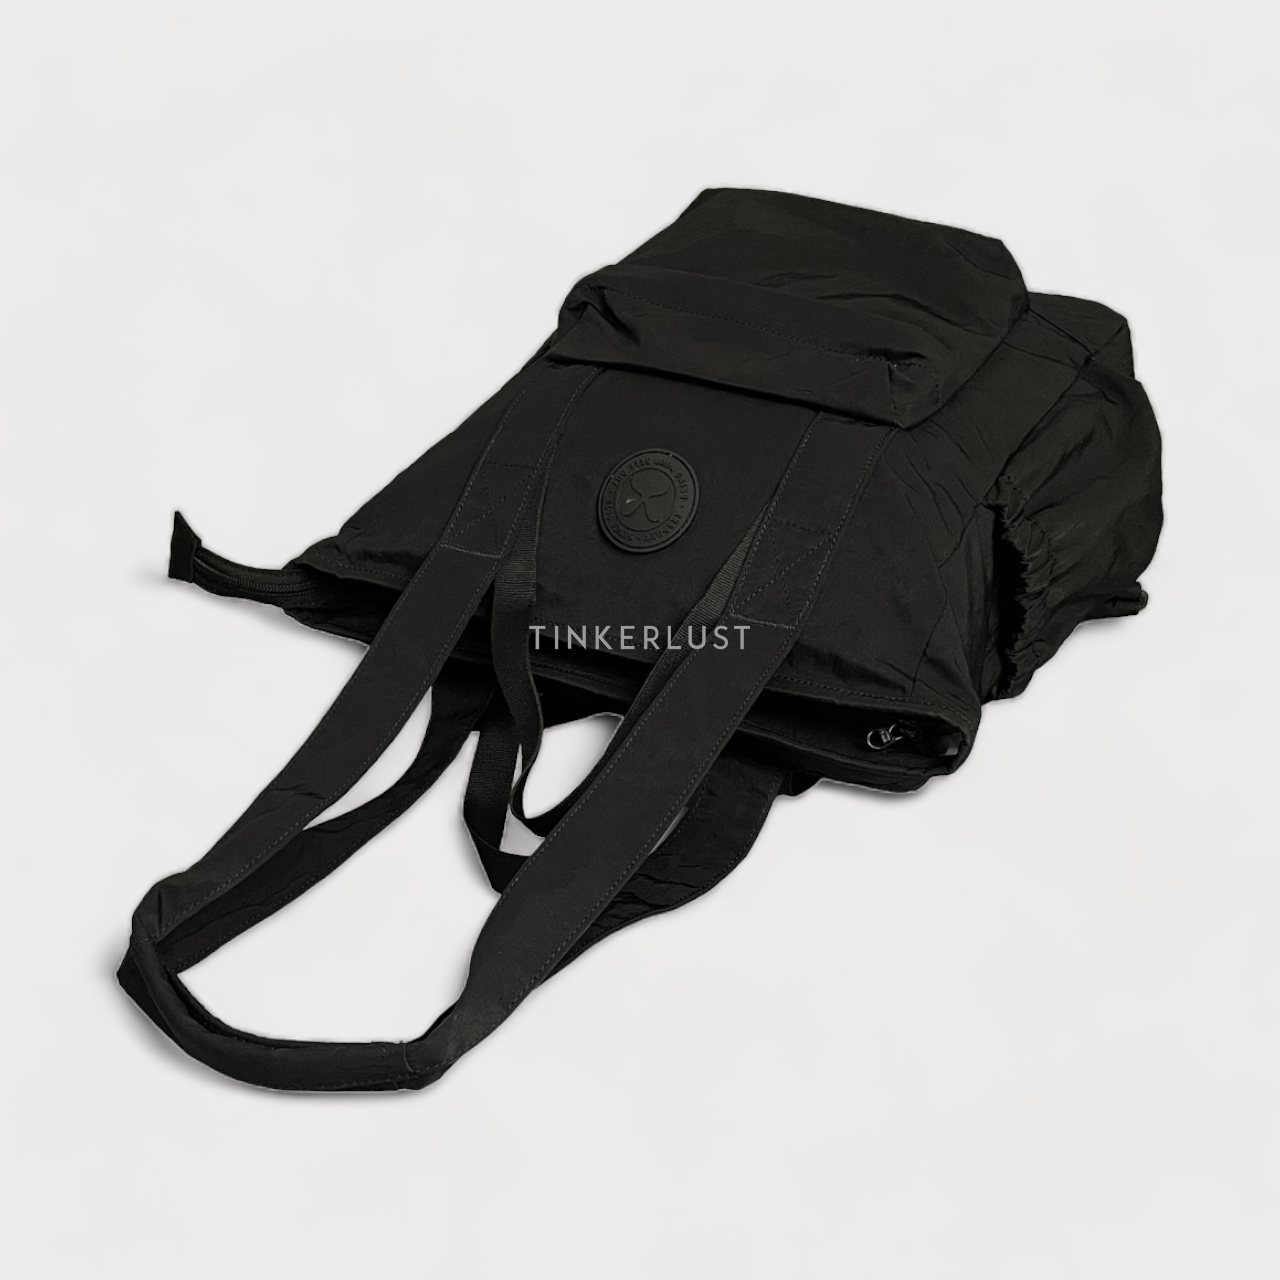 Exsport Black Backpack